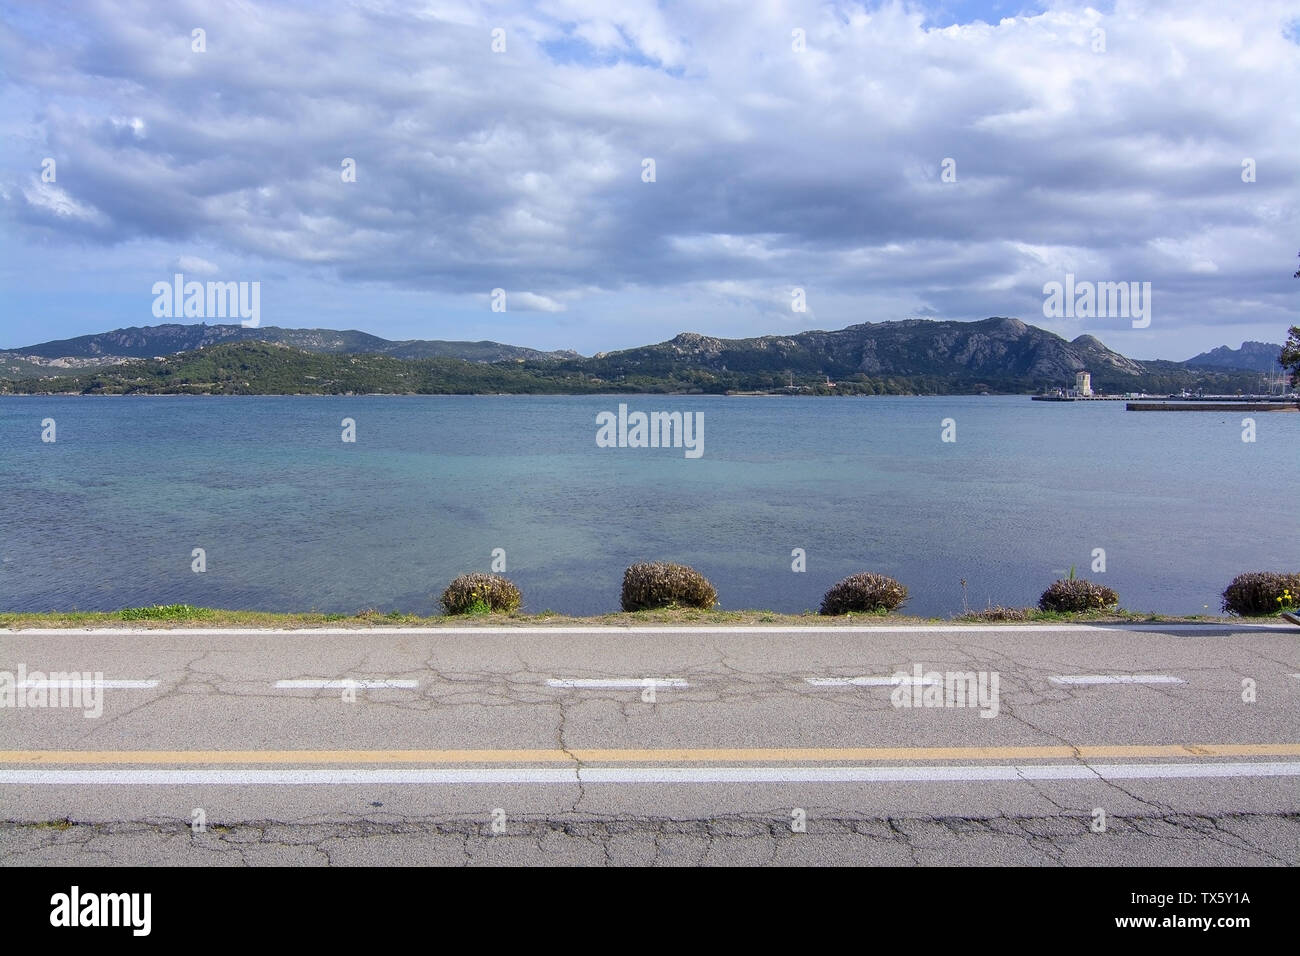 Asphalt countryroad crosses horizontal next to Mediterranean sea in Sardinia, Italy. Stock Photo